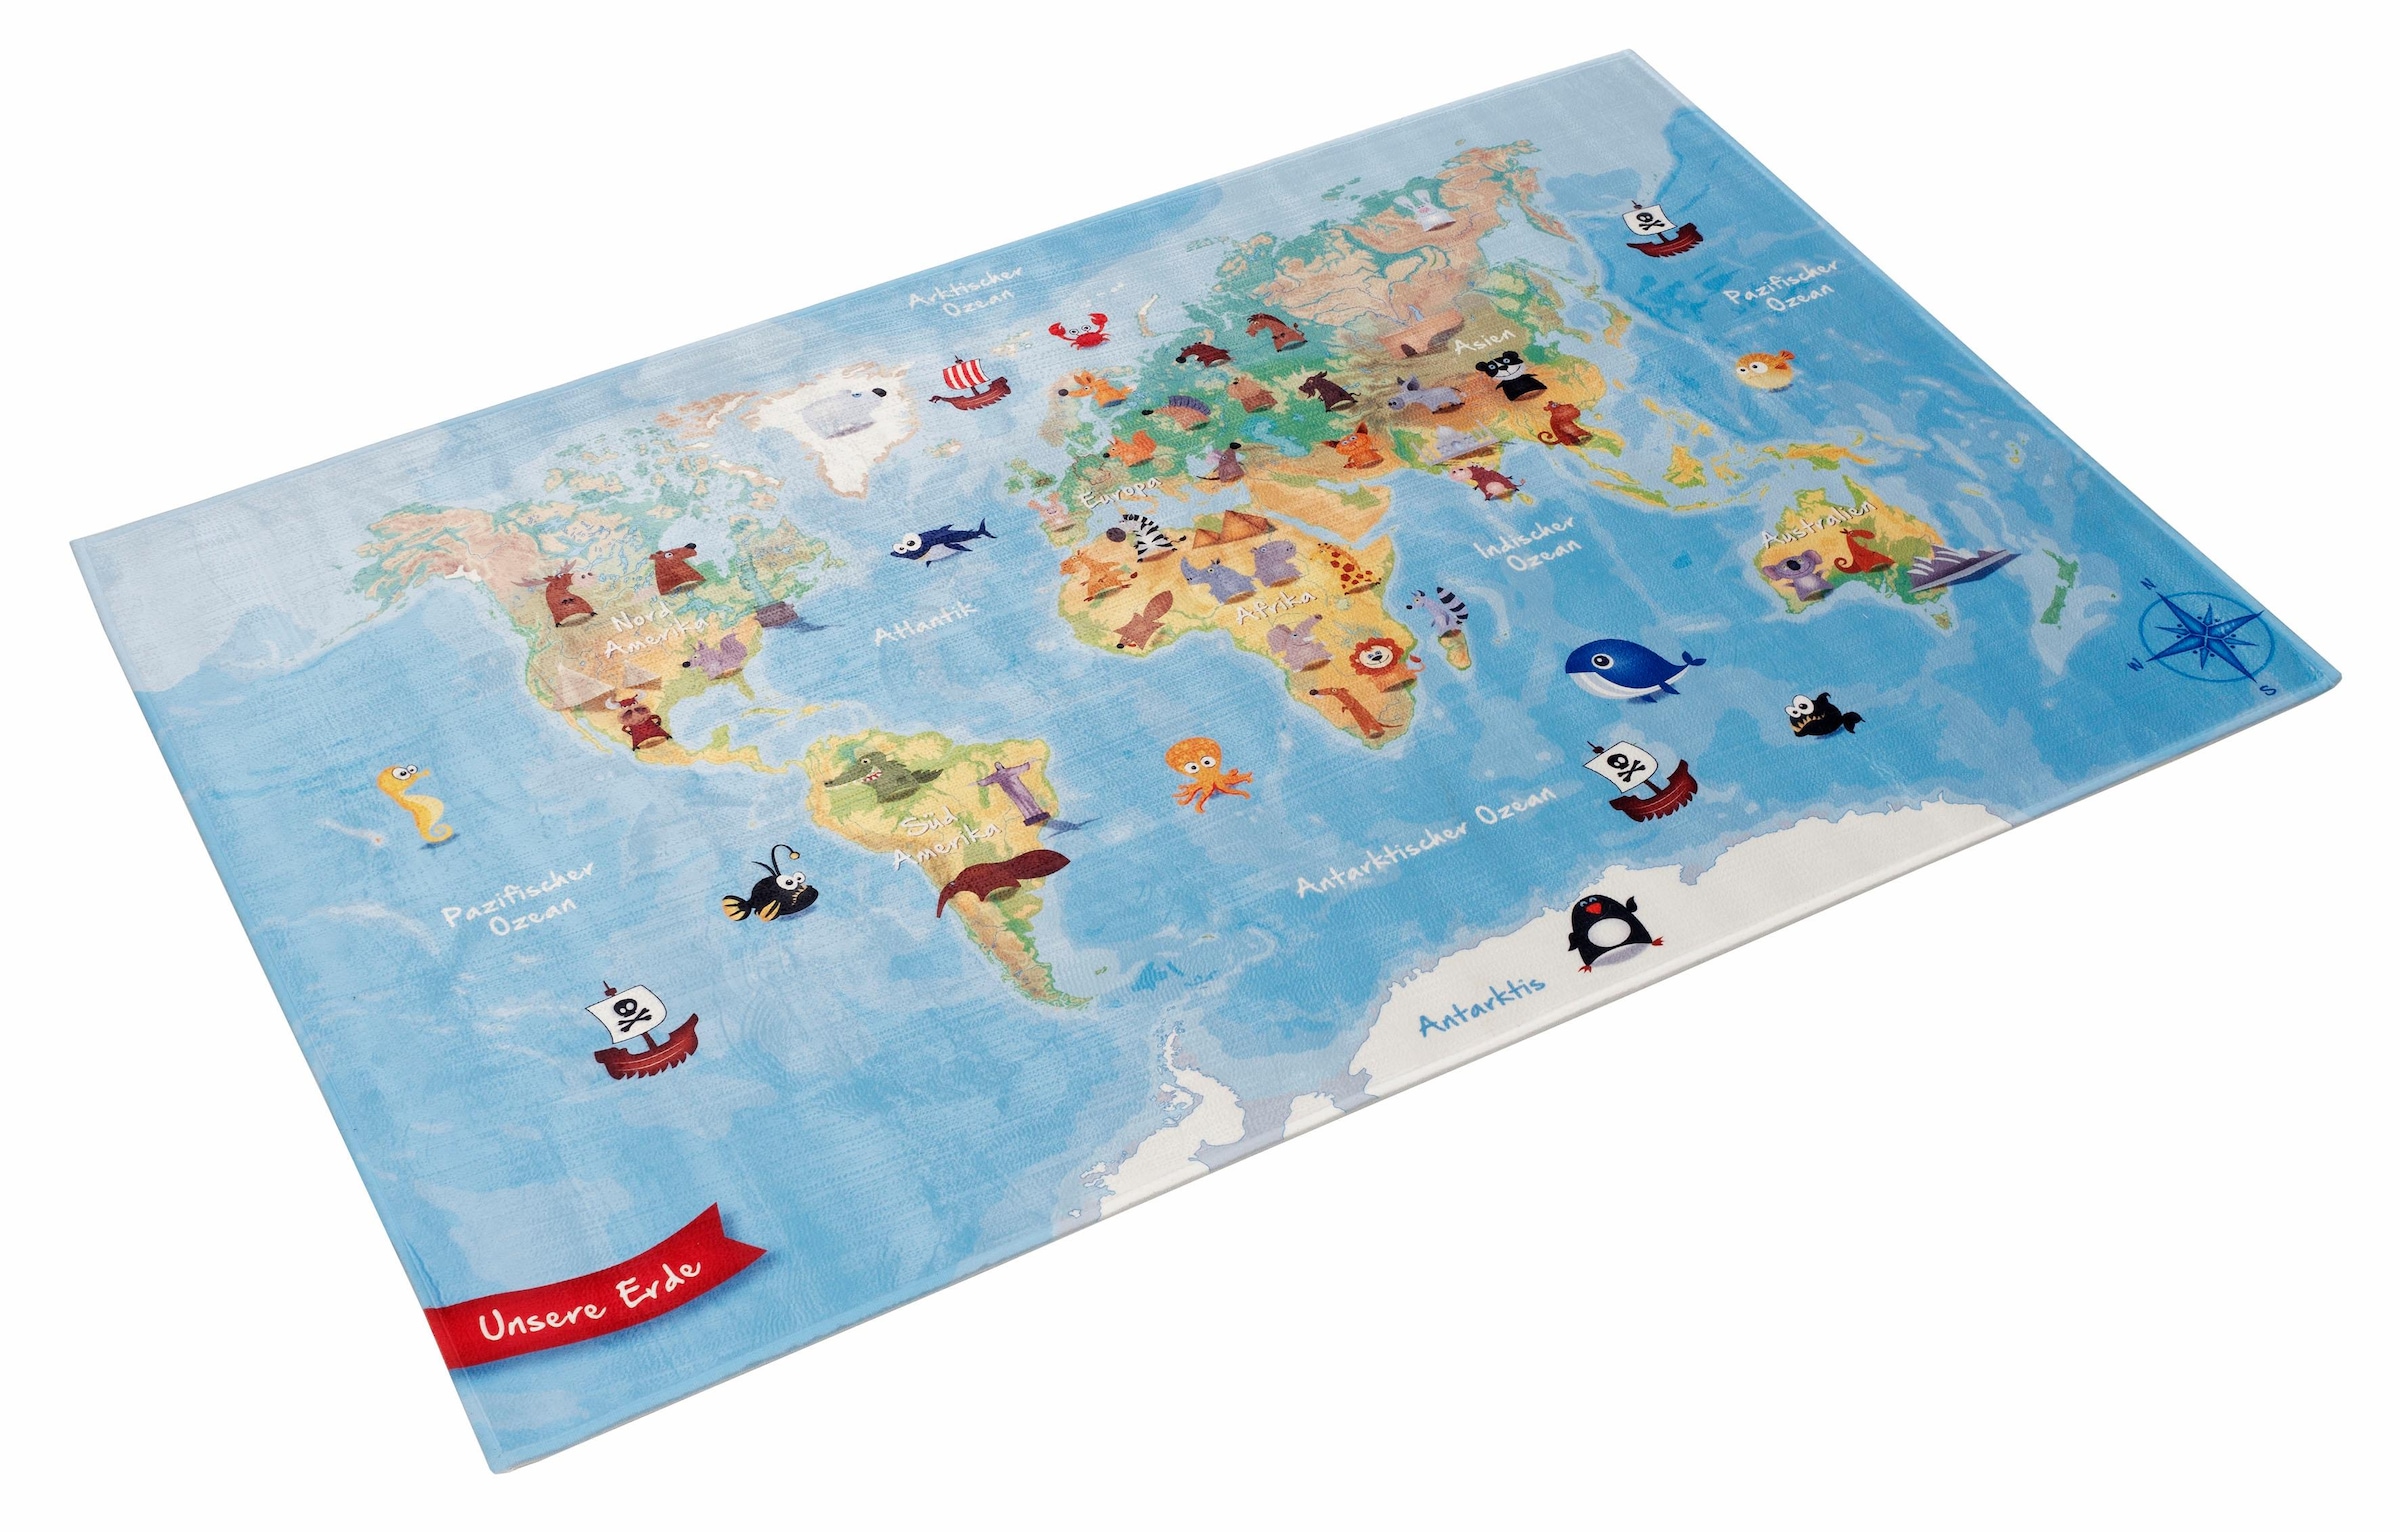 Böing Carpet Kinderteppich »Lovely Kids 413«, rechteckig, Motiv Weltkarte  kaufen